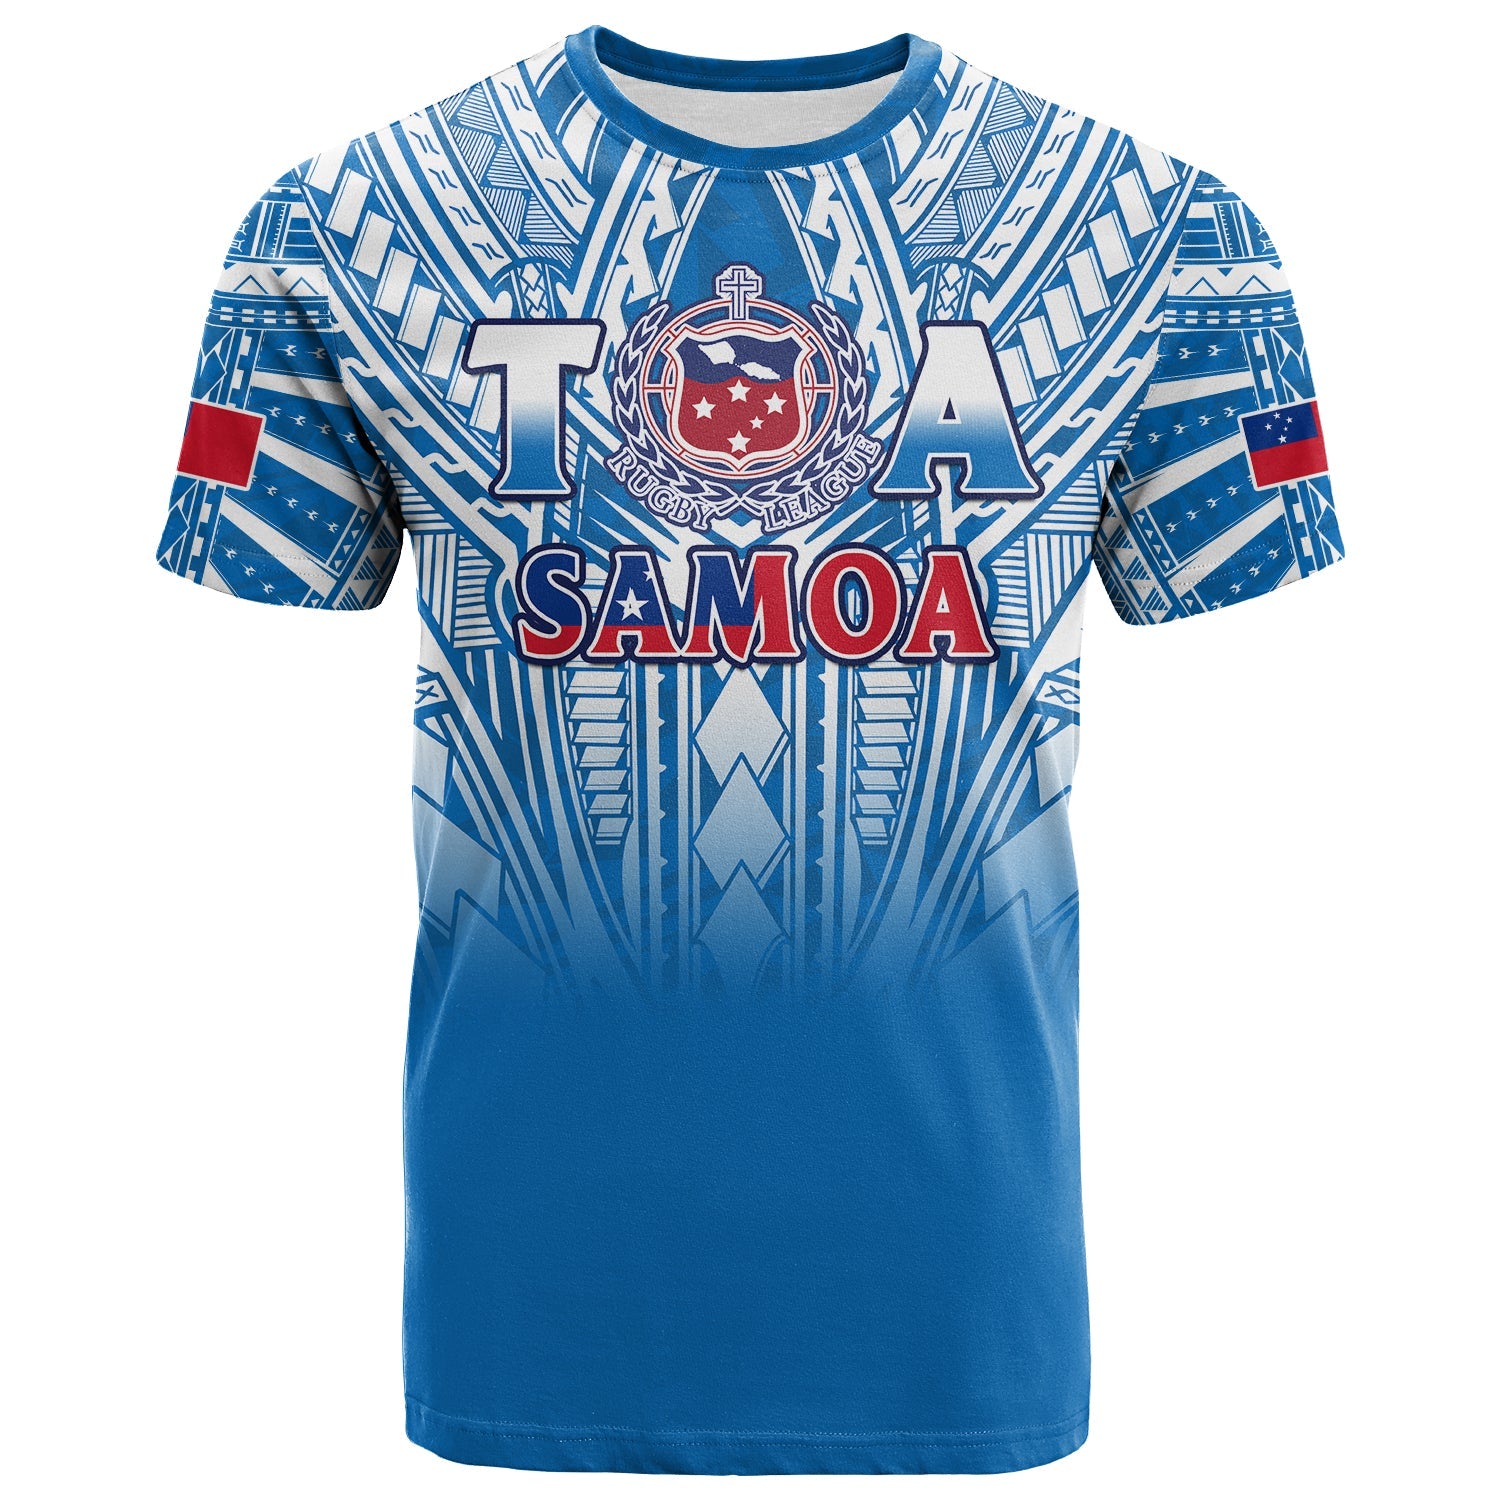 Samoa Rugby T Shirt Toa Samoa Polynesian Pacific Blue Version LT14 Blue - Polynesian Pride